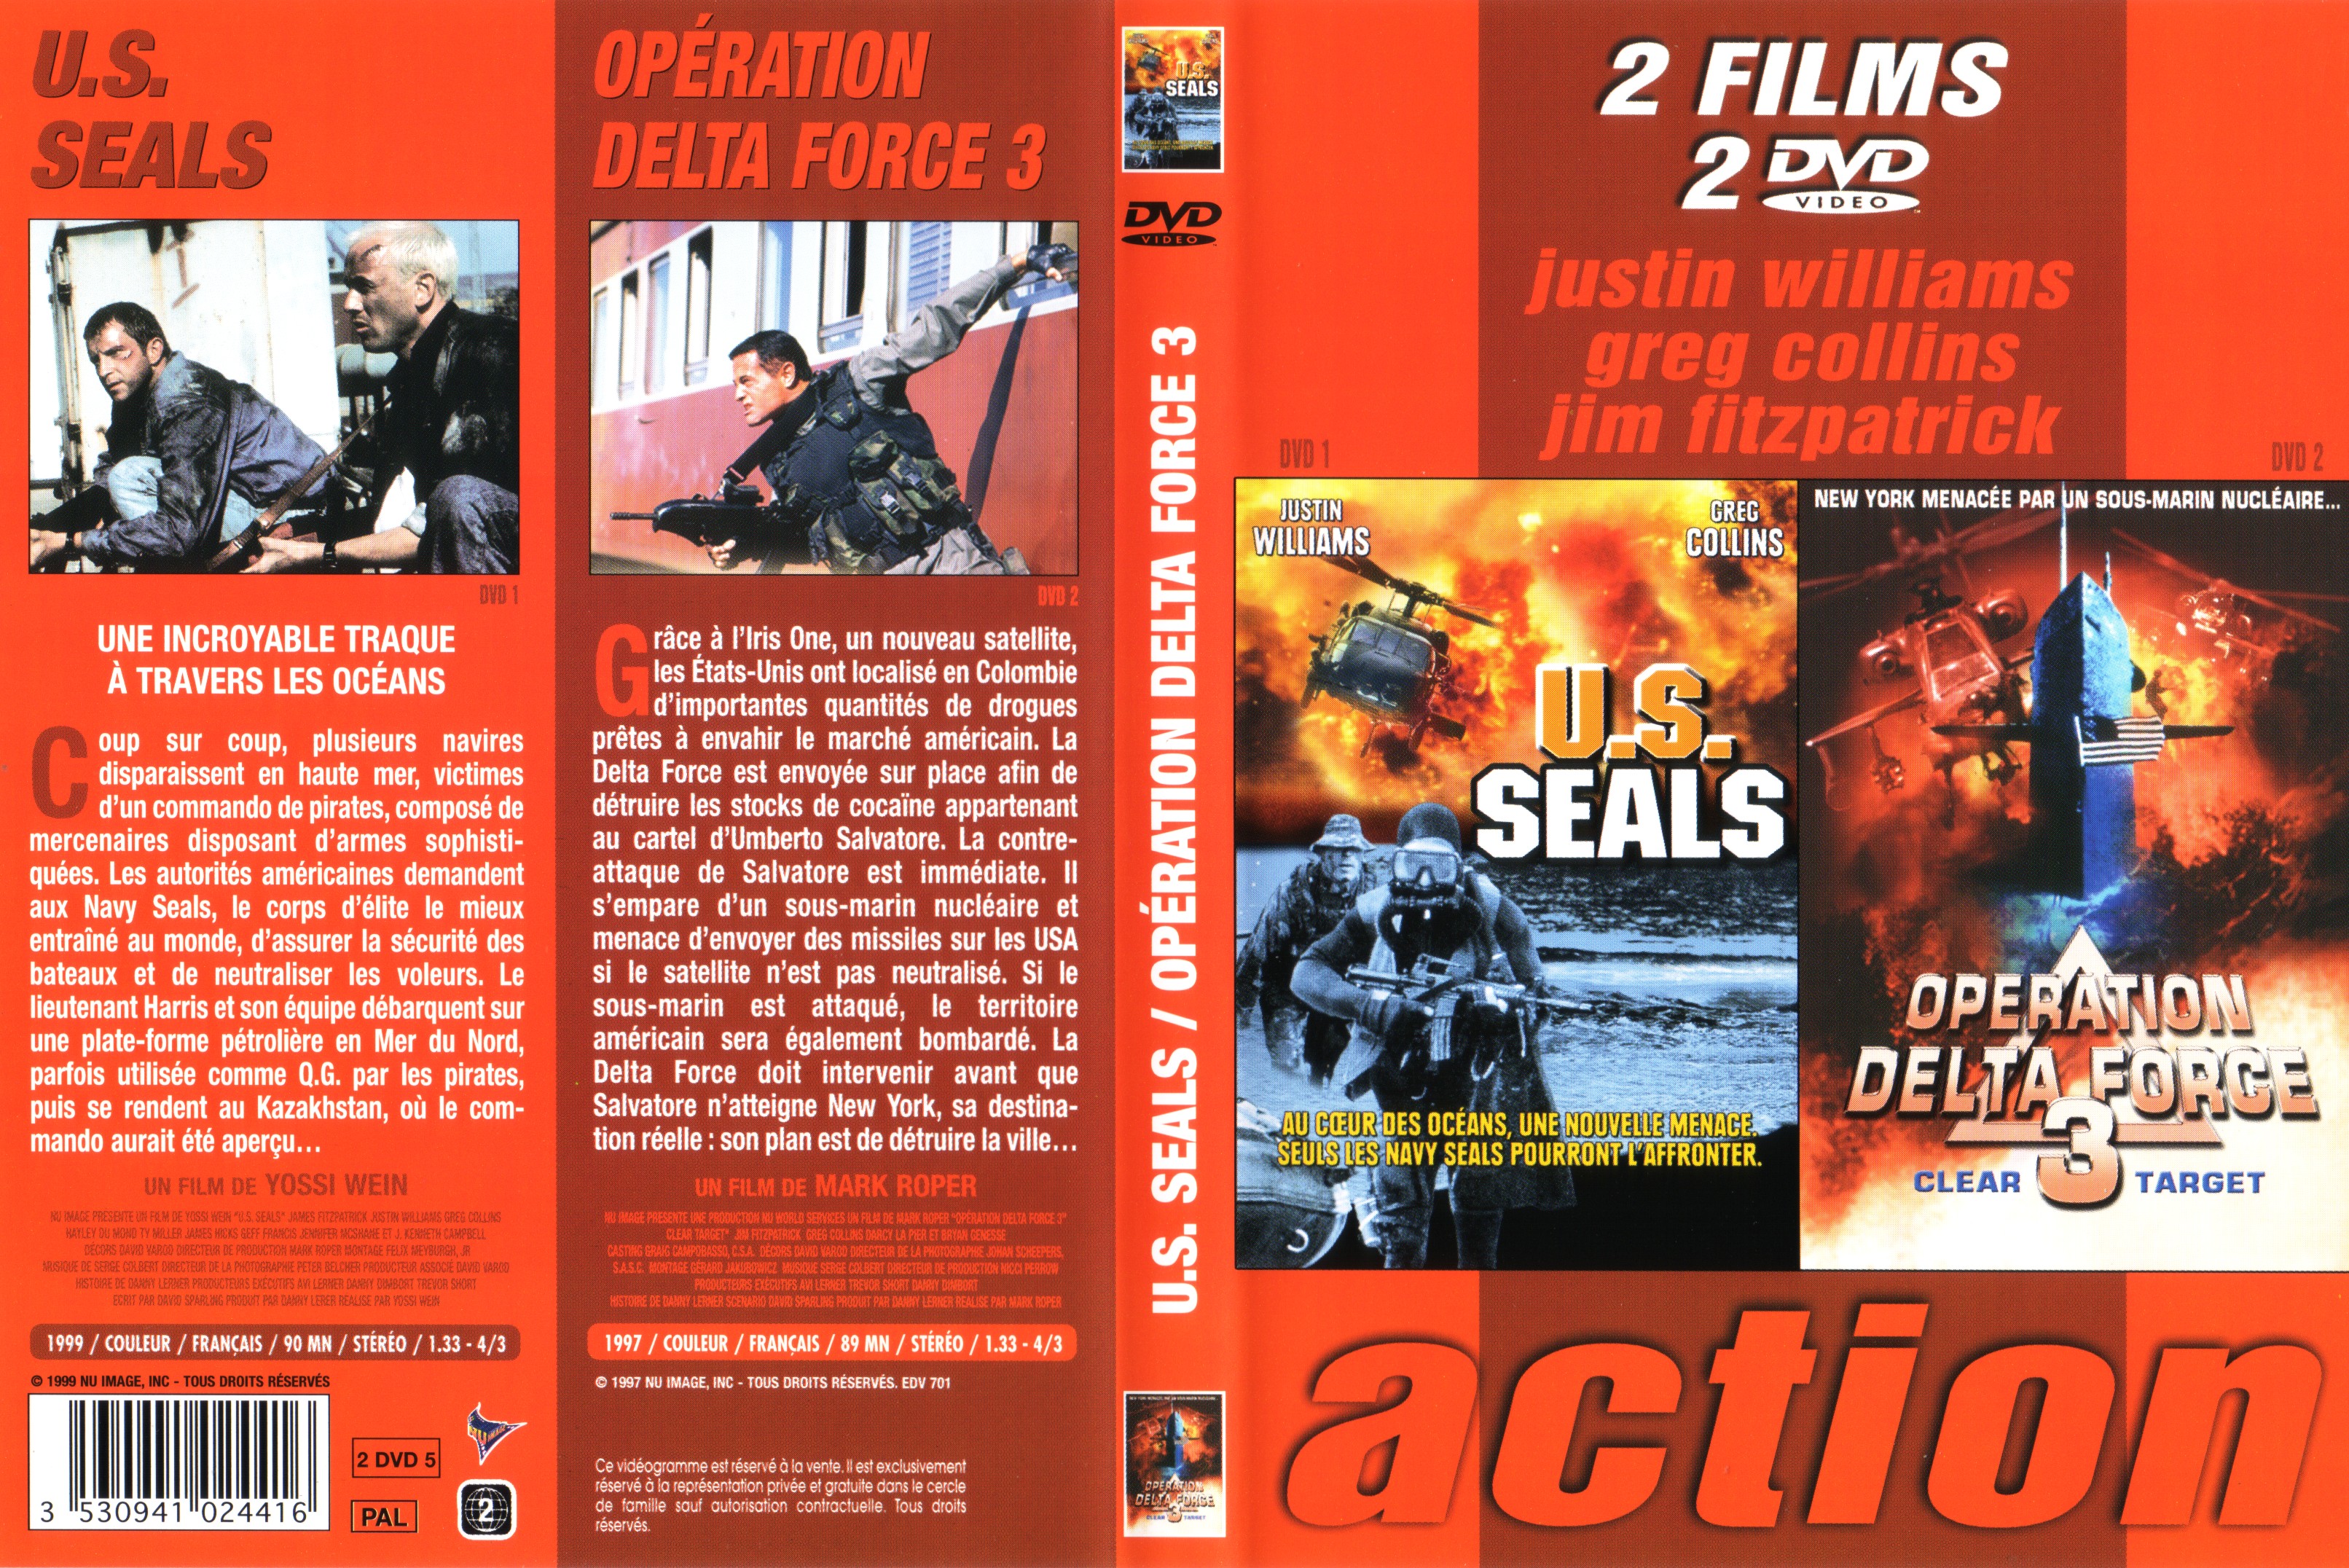 Jaquette DVD US seals + Operation delta force 3